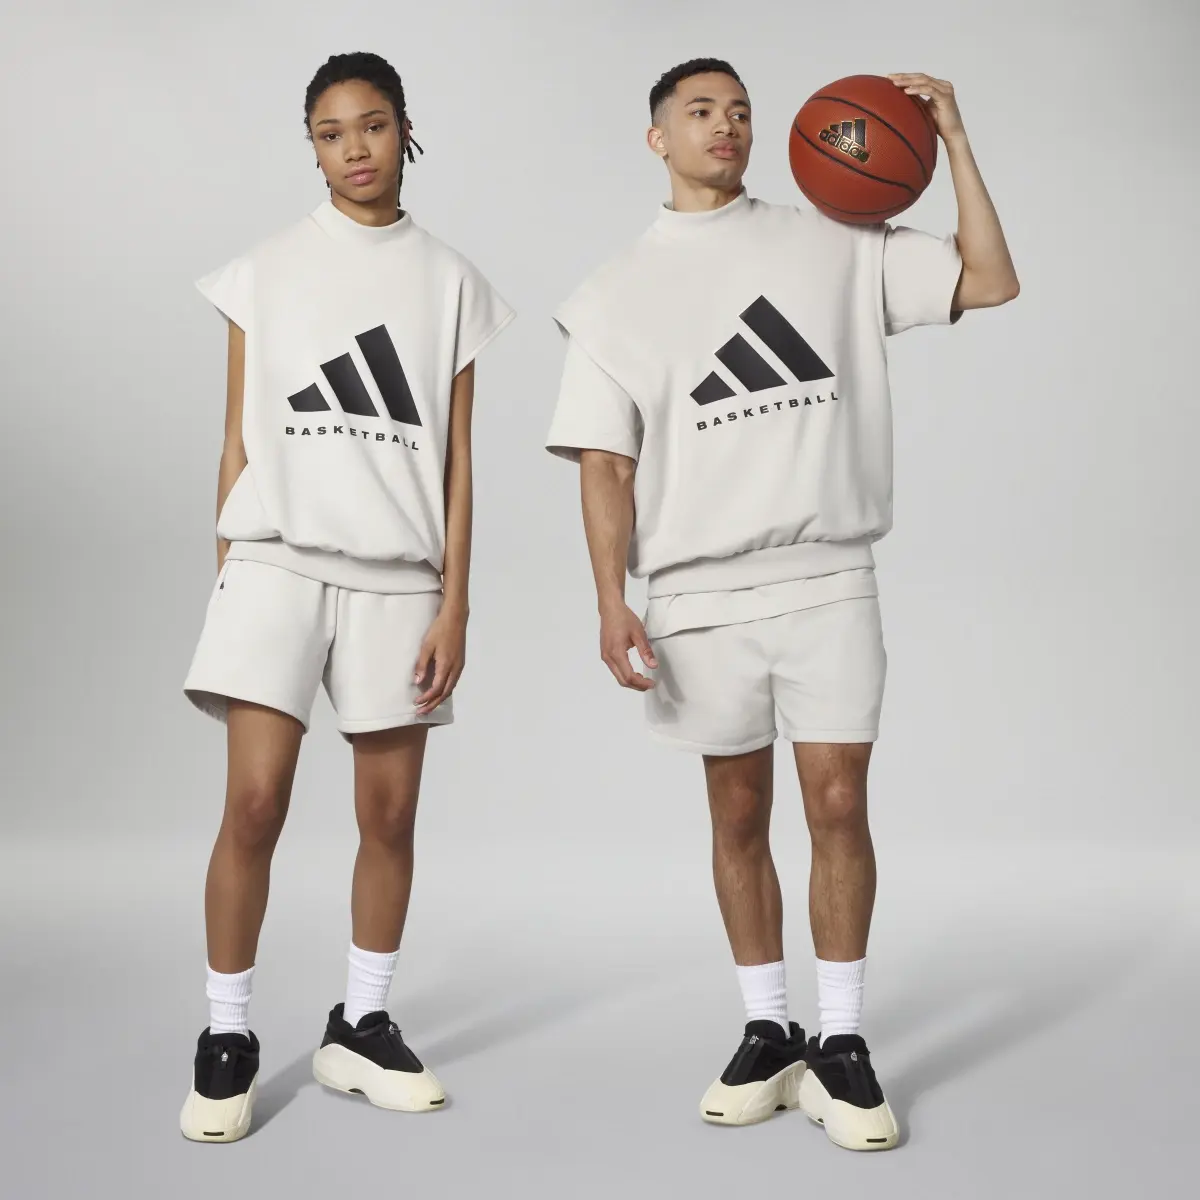 Adidas Sudadera sin mangas adidas Basketball. 1